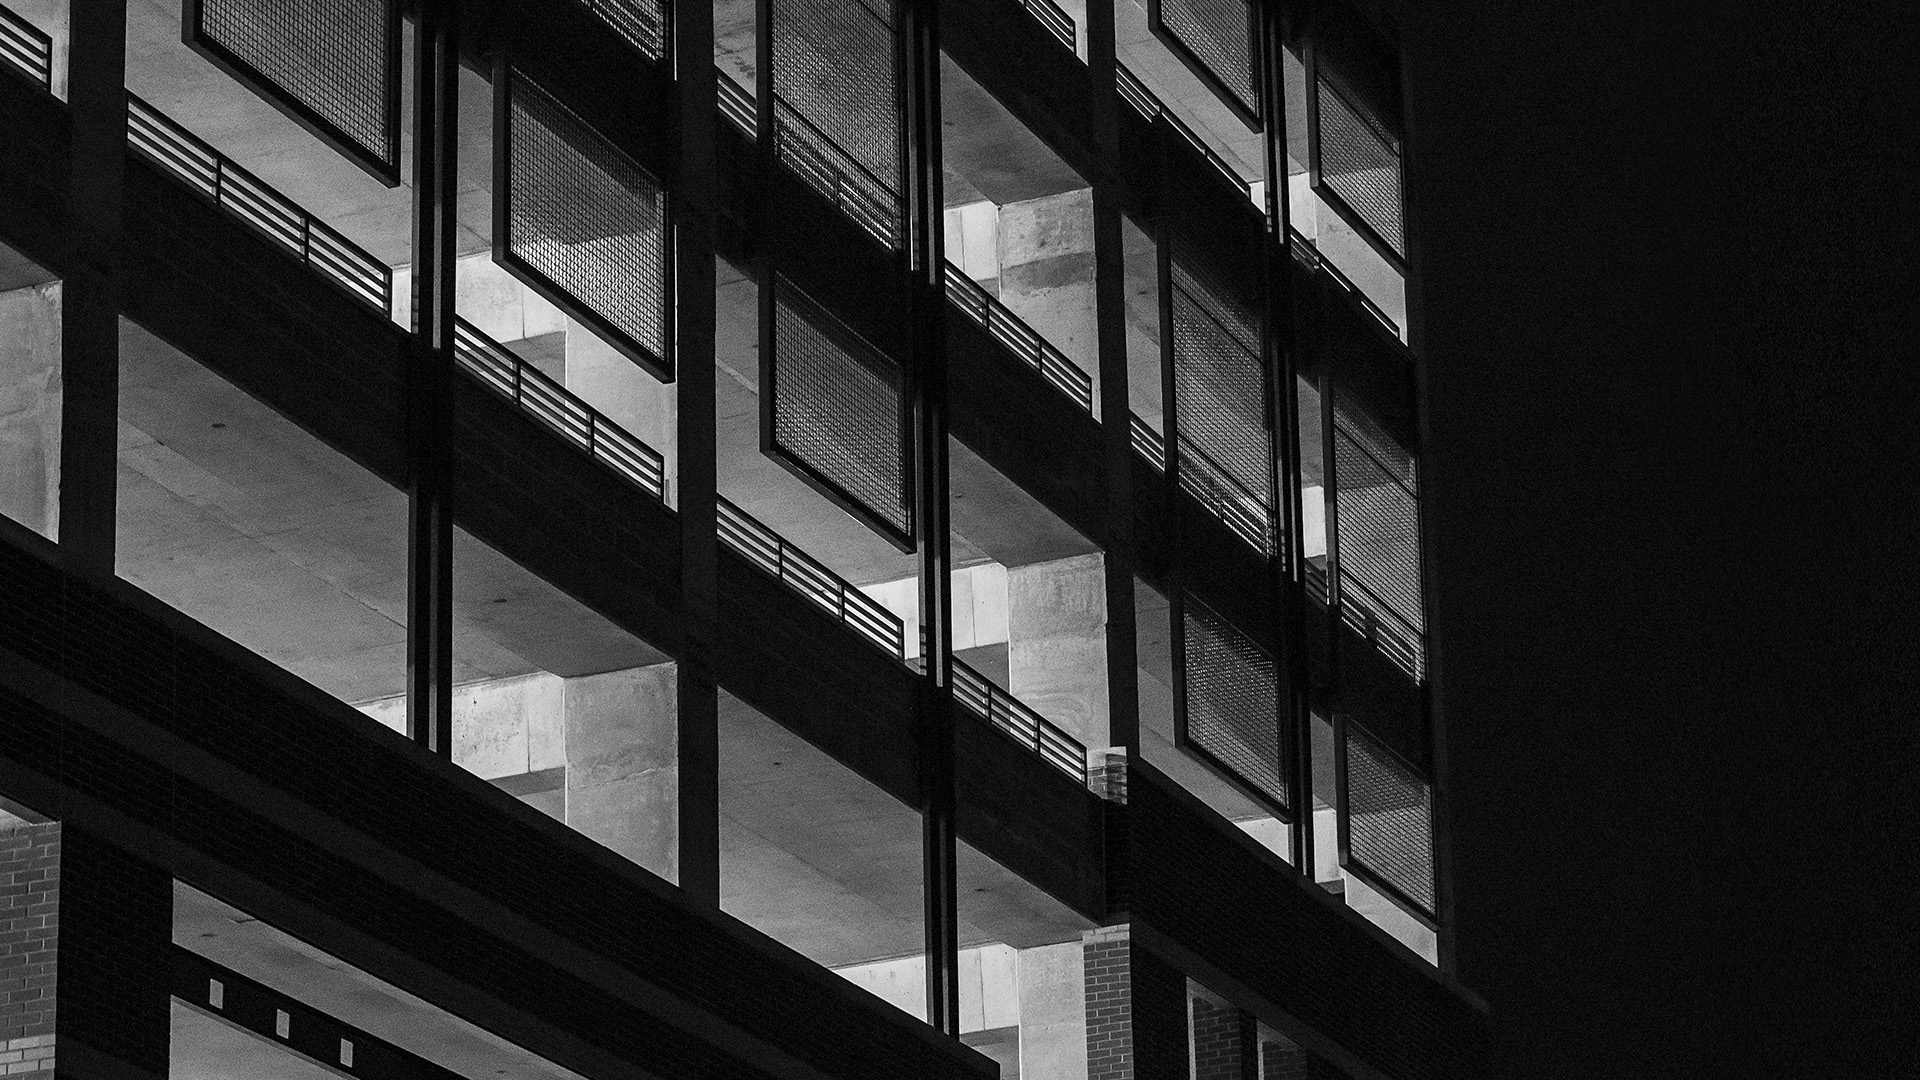 wallpaper for desktop, laptop. bw night building window dark architecture city